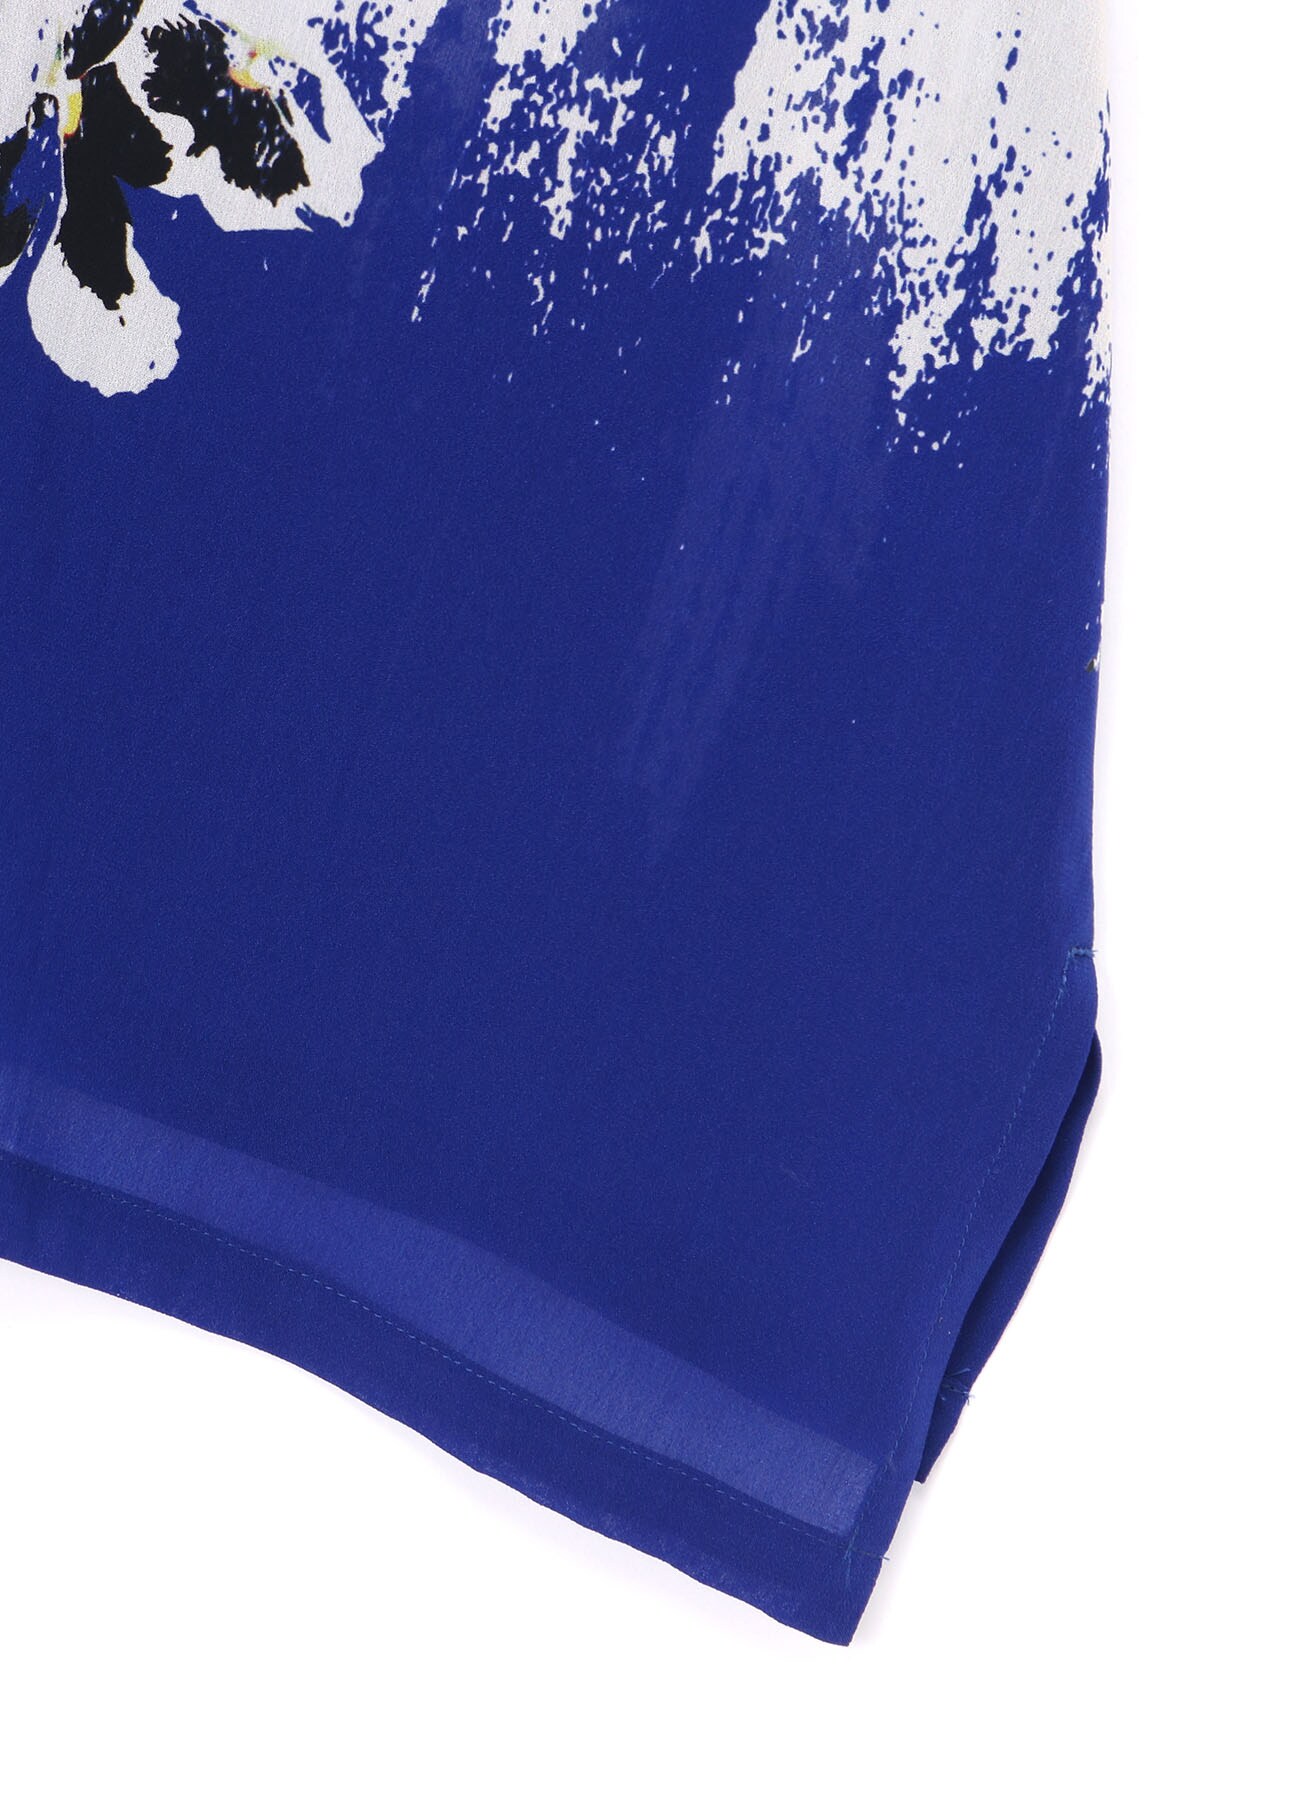 BLURRED PANSY PRINT SLEEVELESS TURTLENECK DRESS(XS Blue): Vintage 